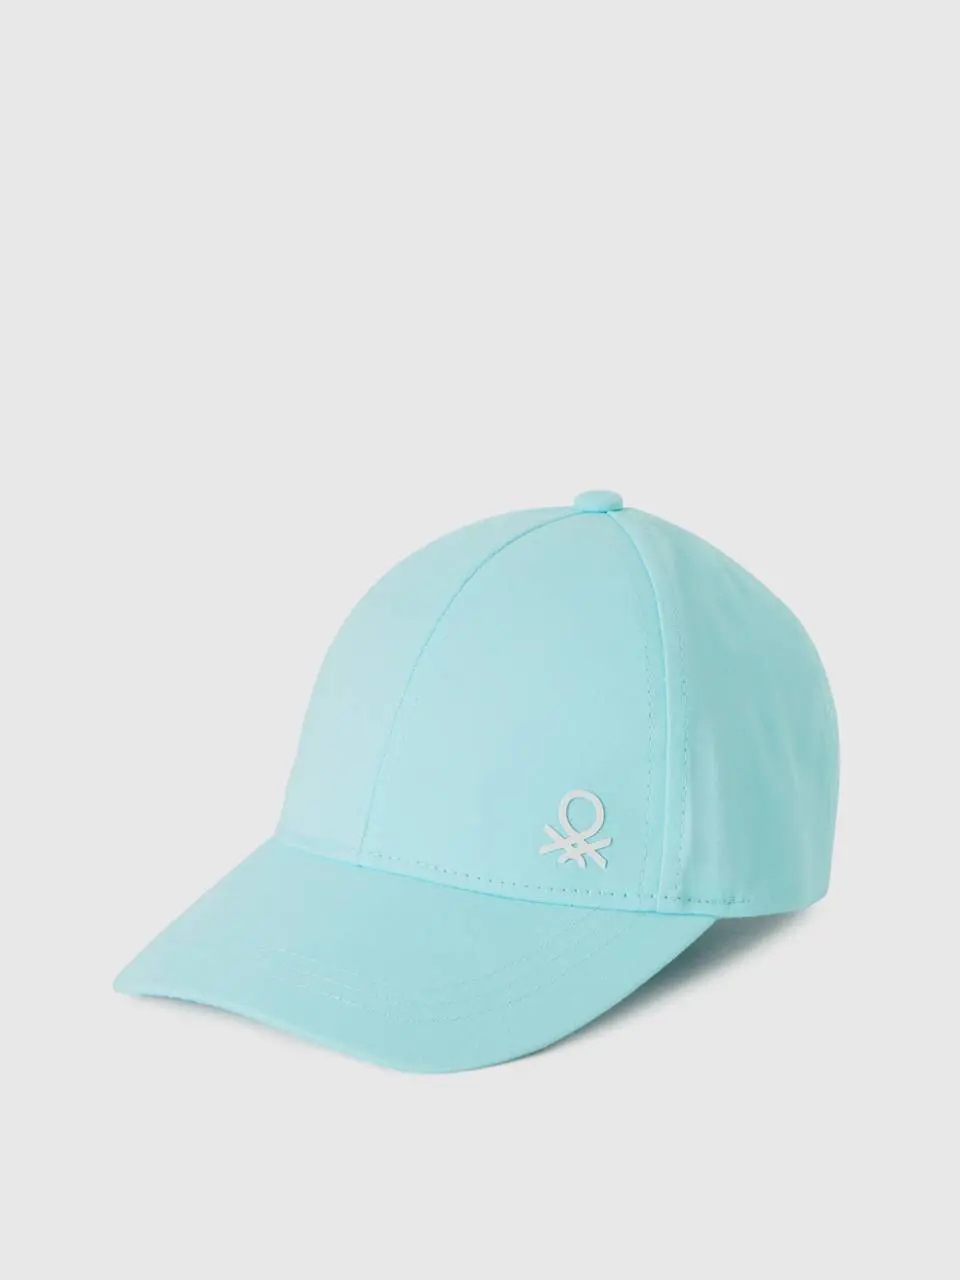 Benetton cap with visor. 1